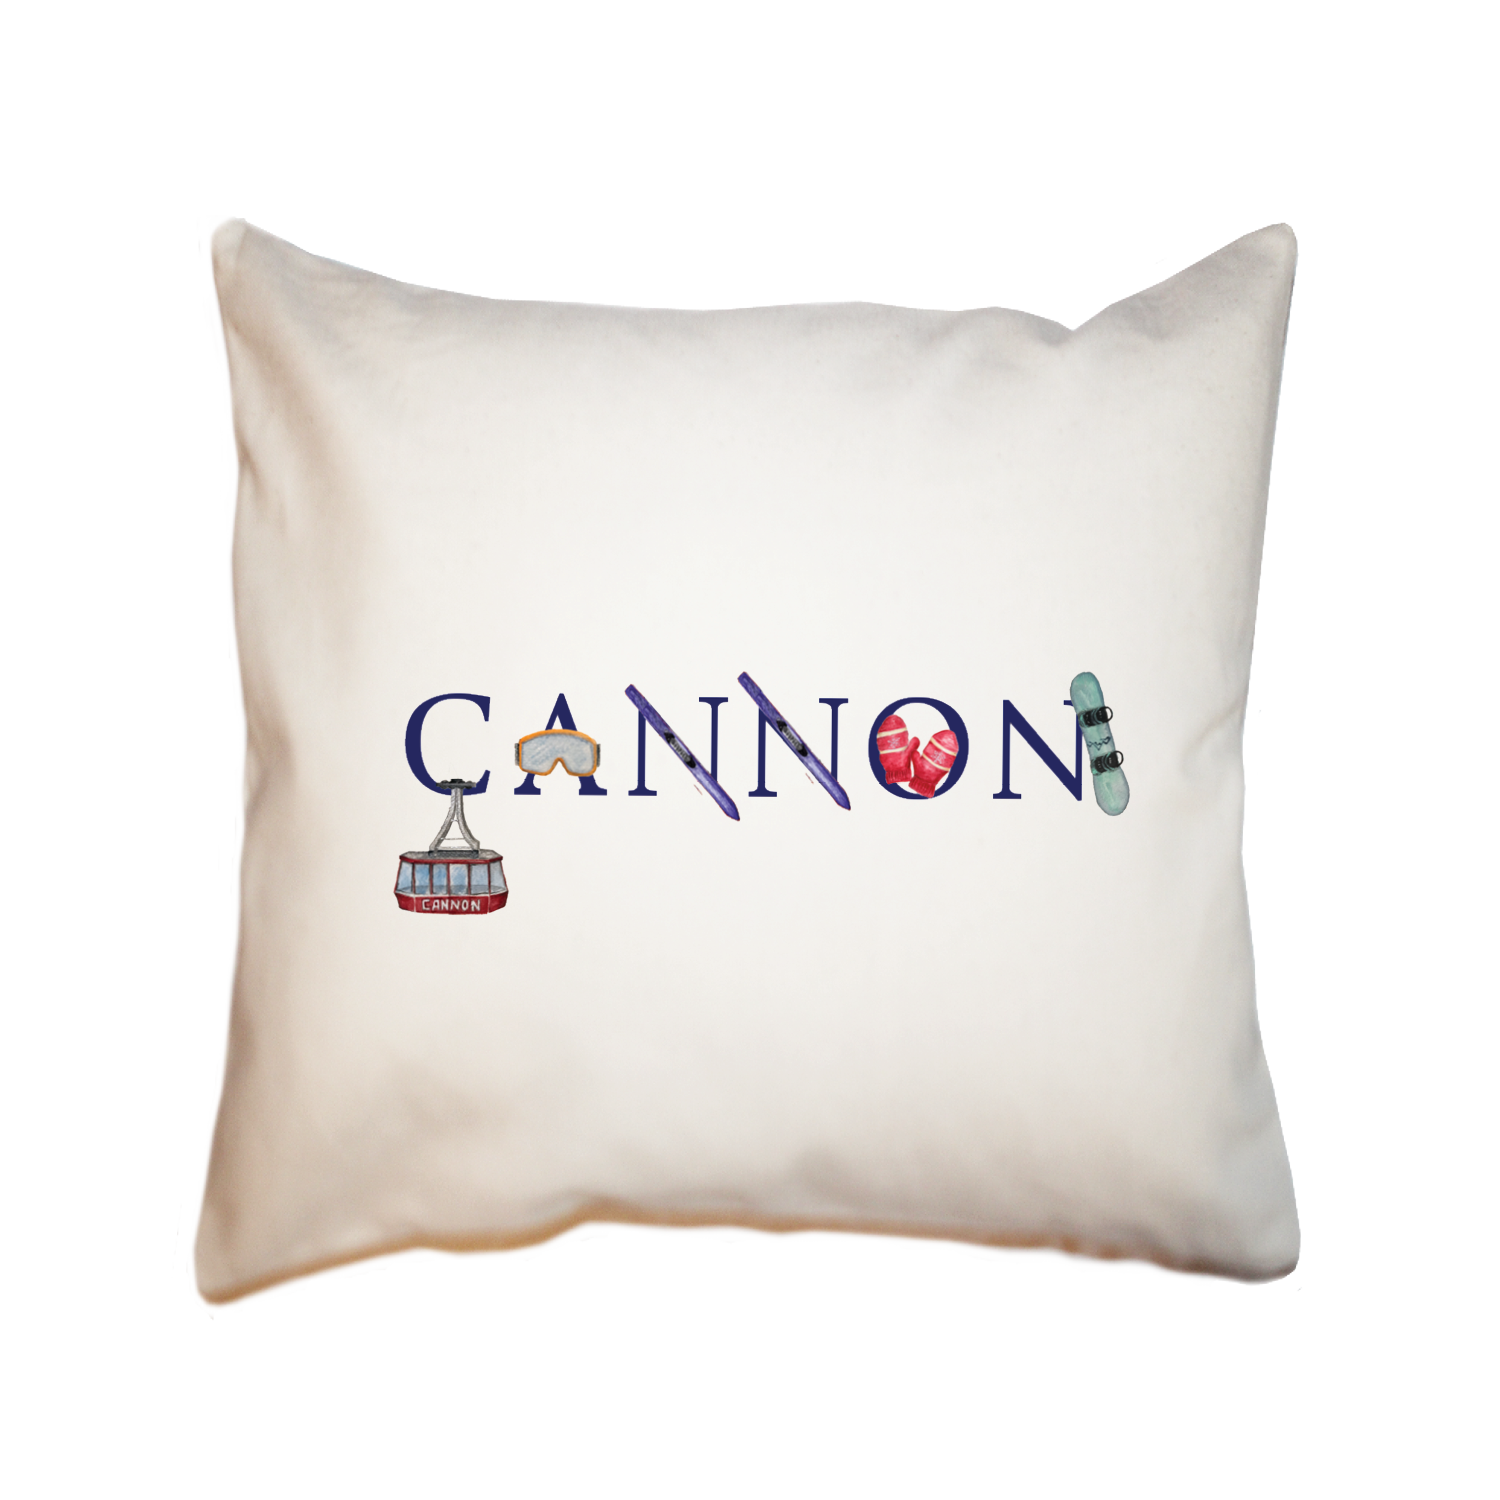 cannon square pillow